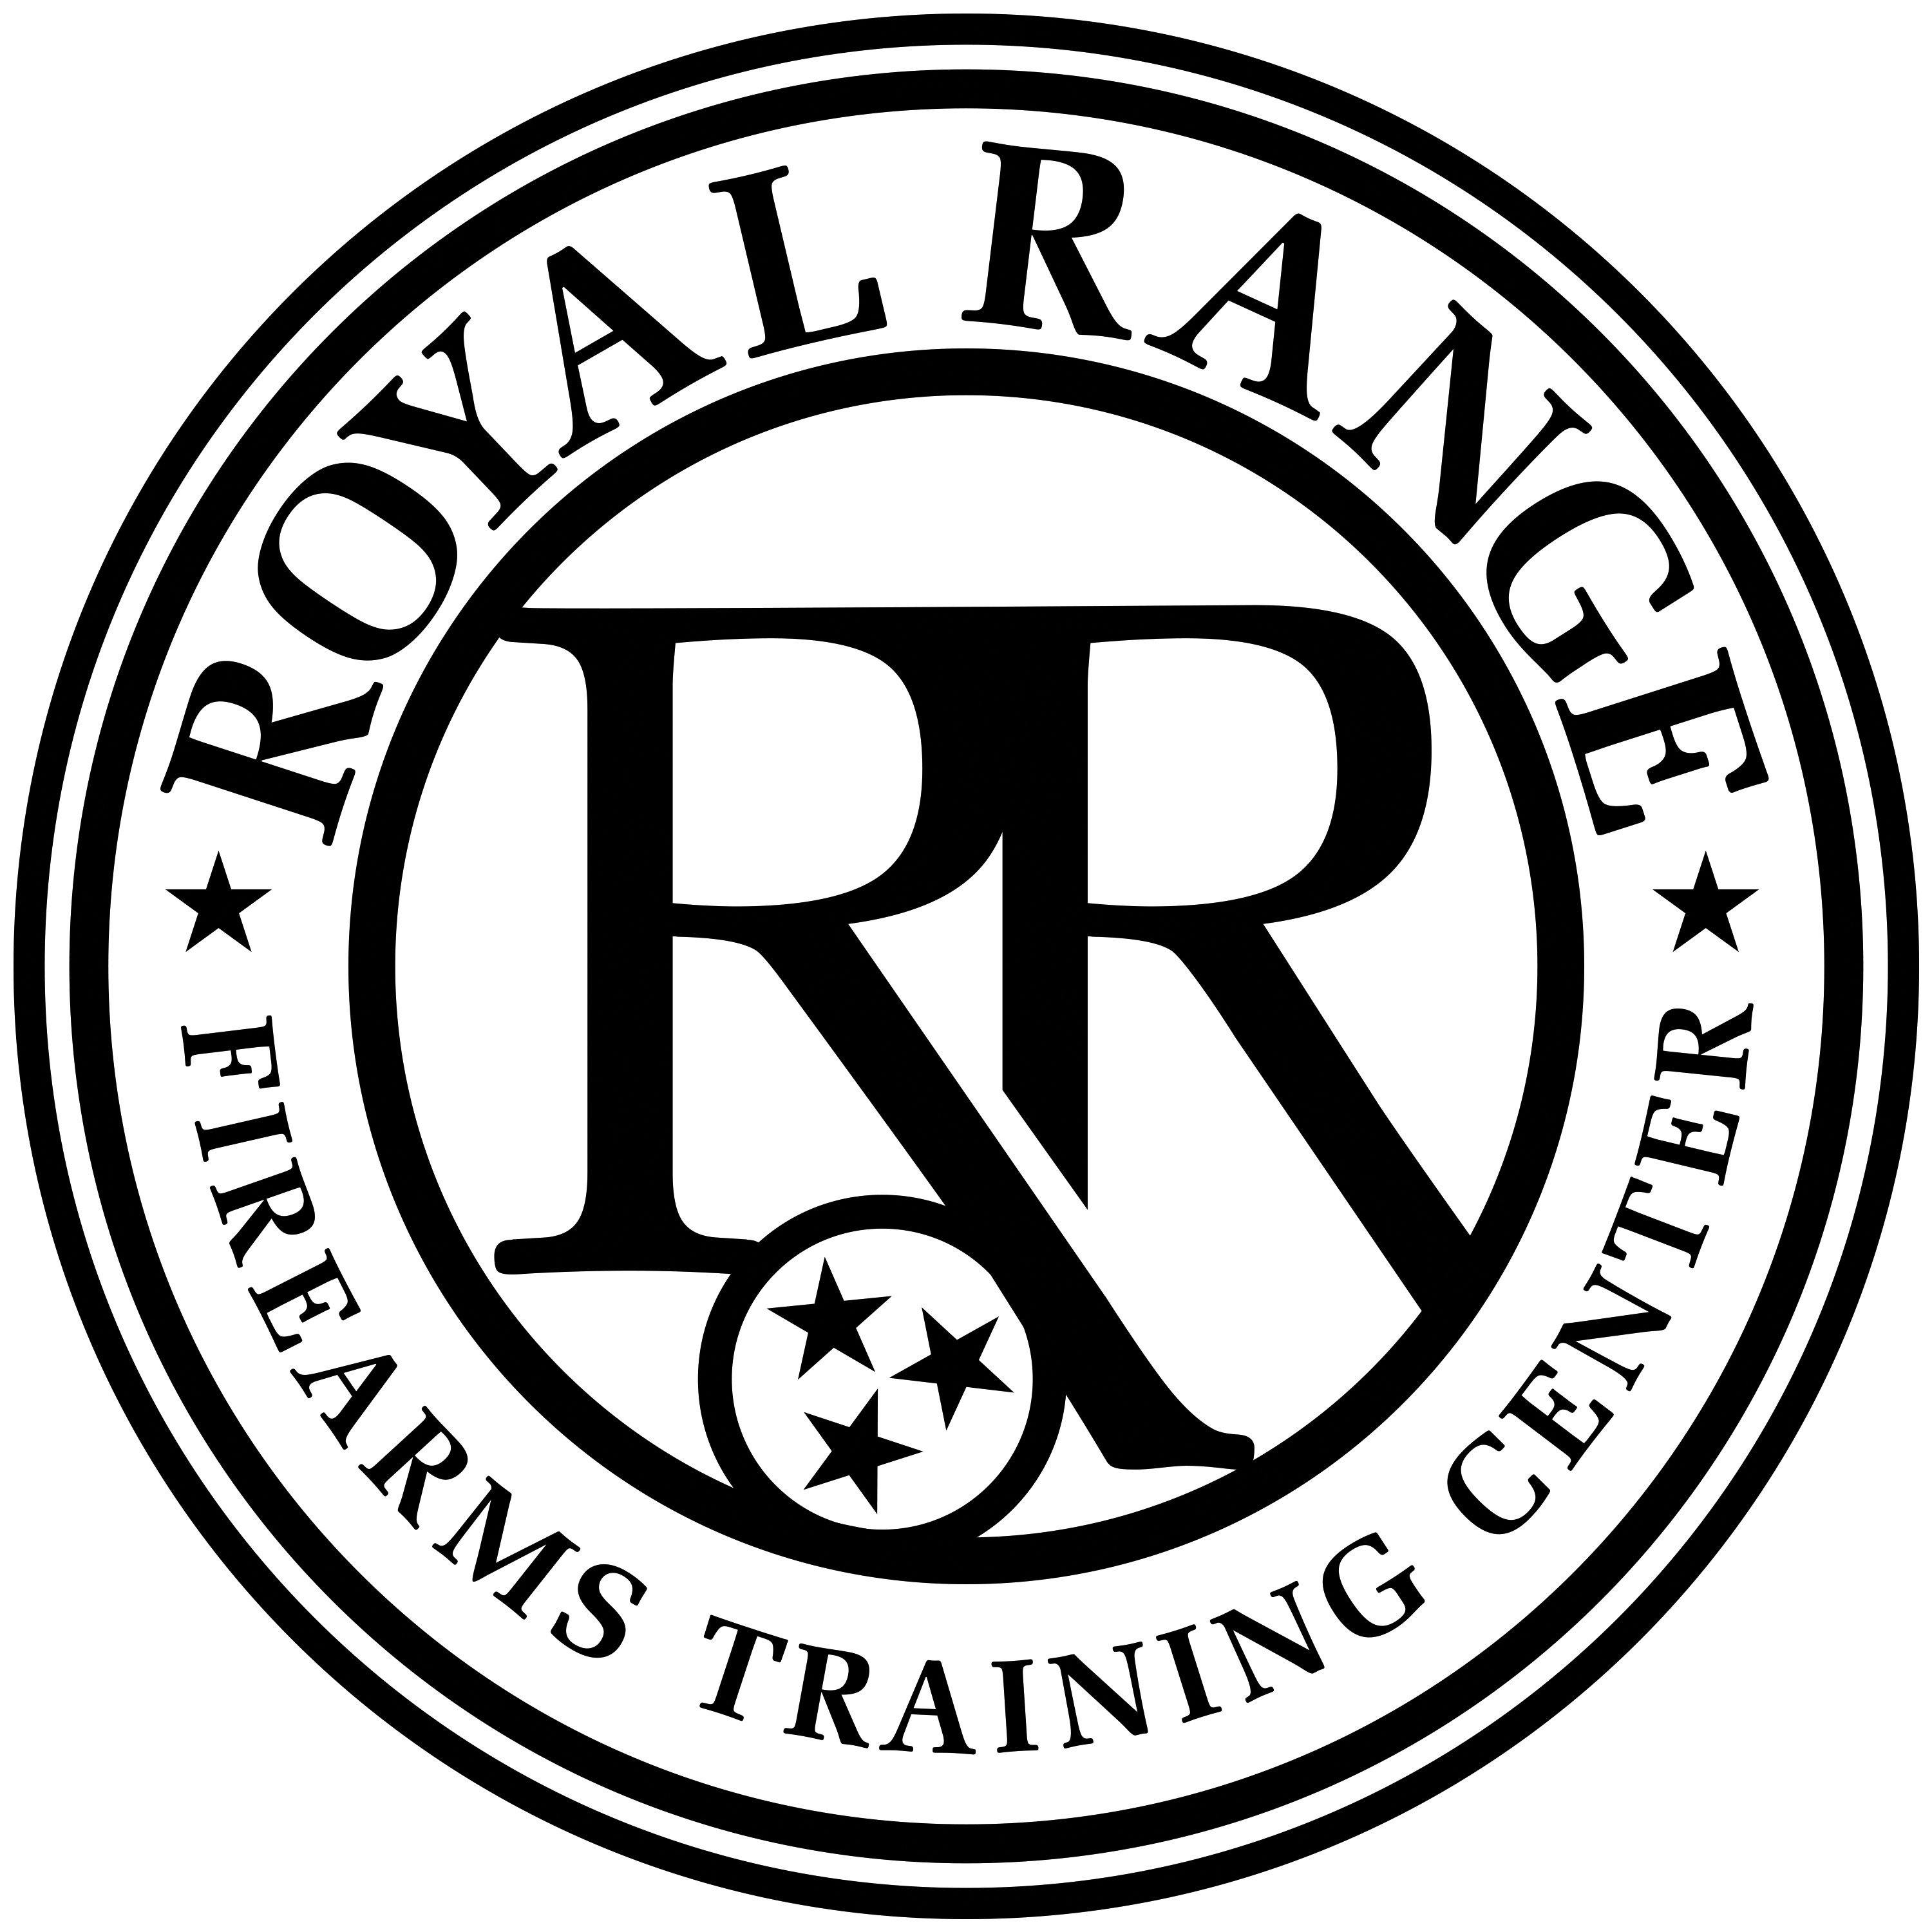 Royal Range Training Calendar - Armed Guard Recertification